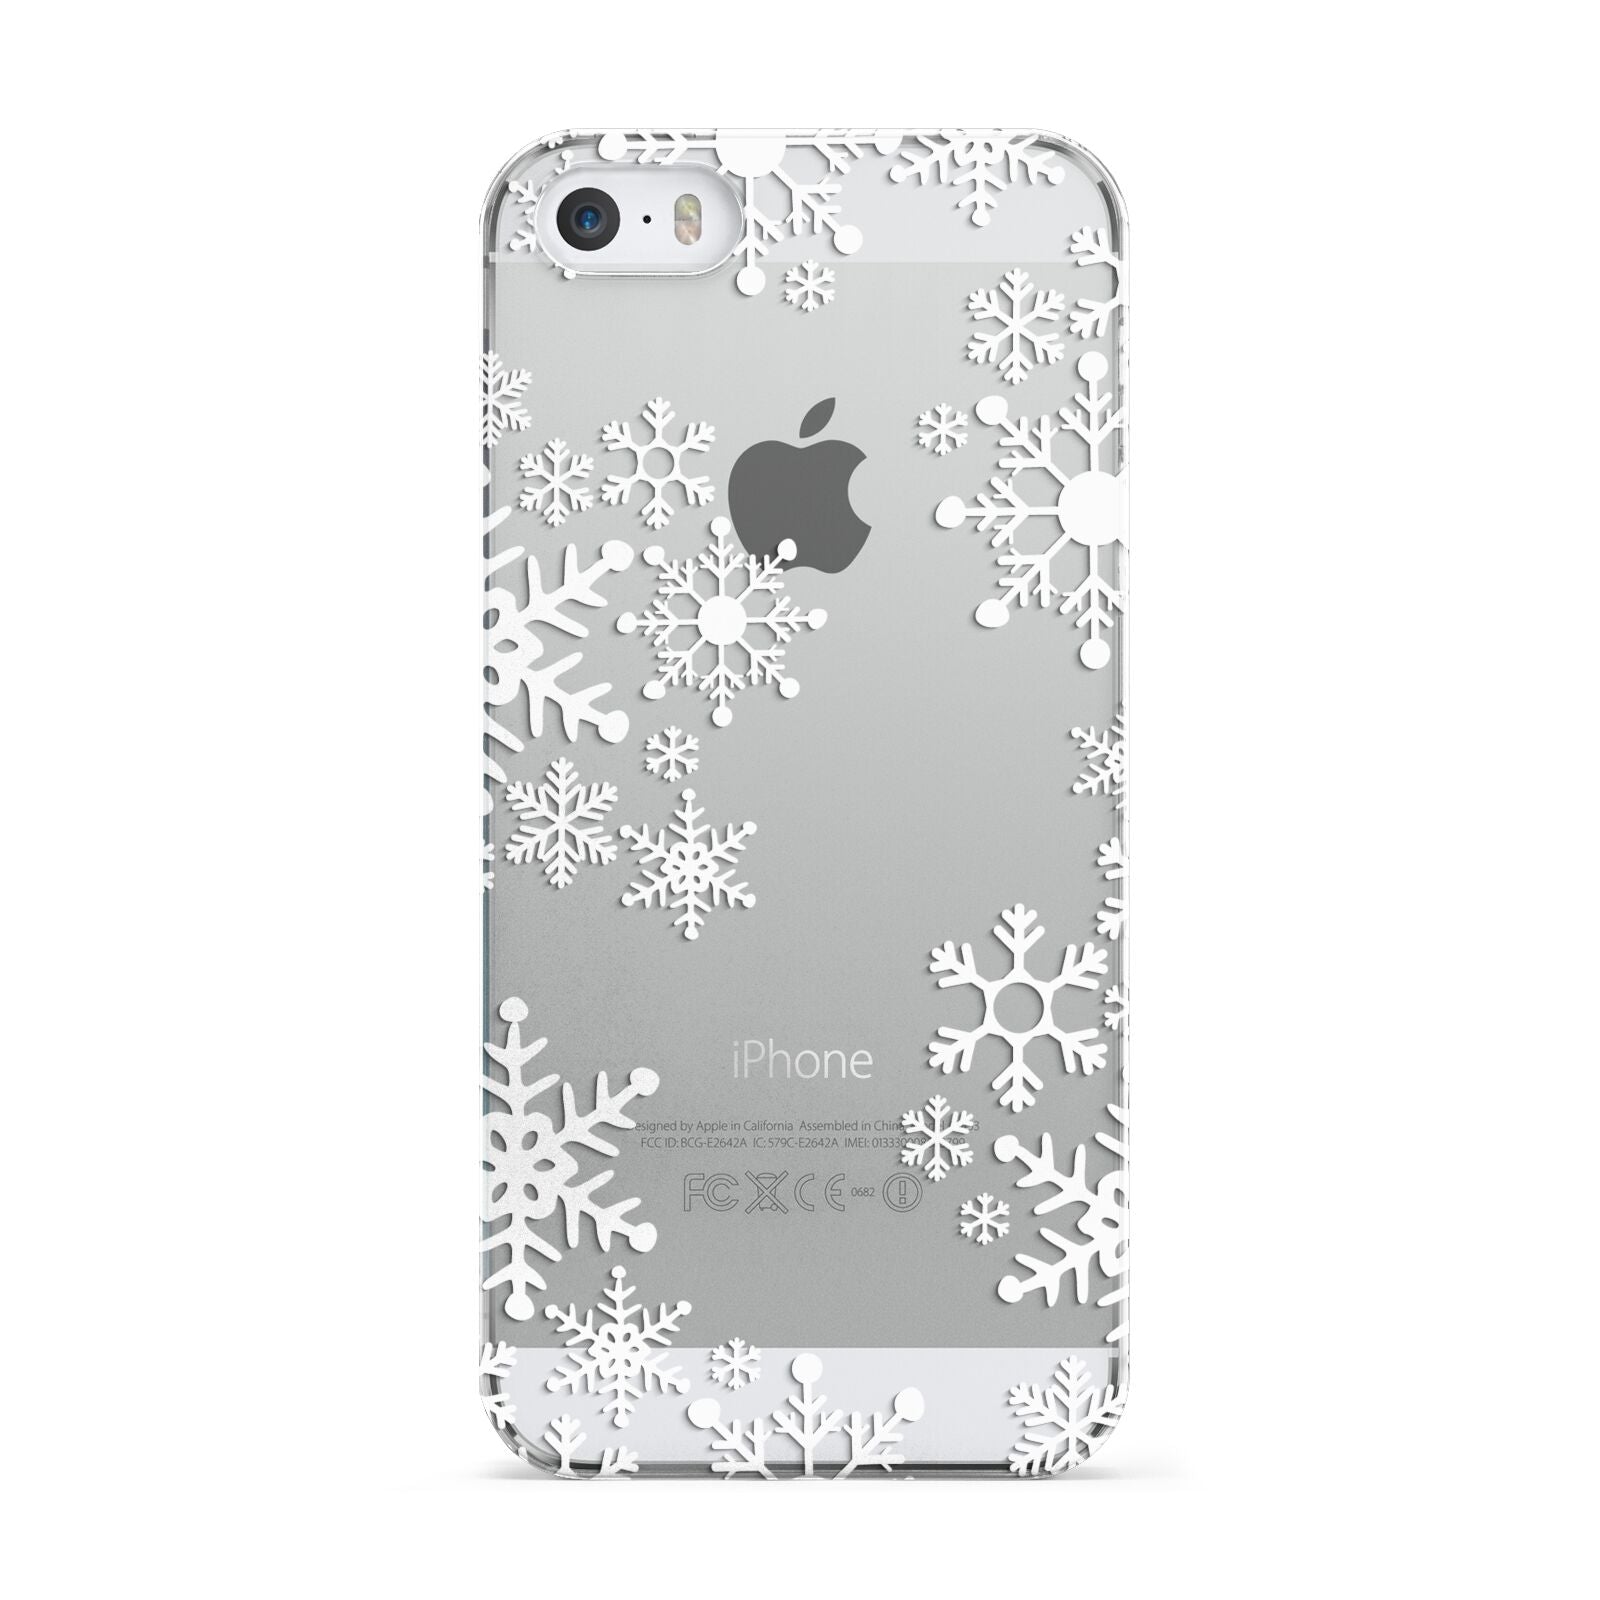 Snowflake Apple iPhone 5 Case